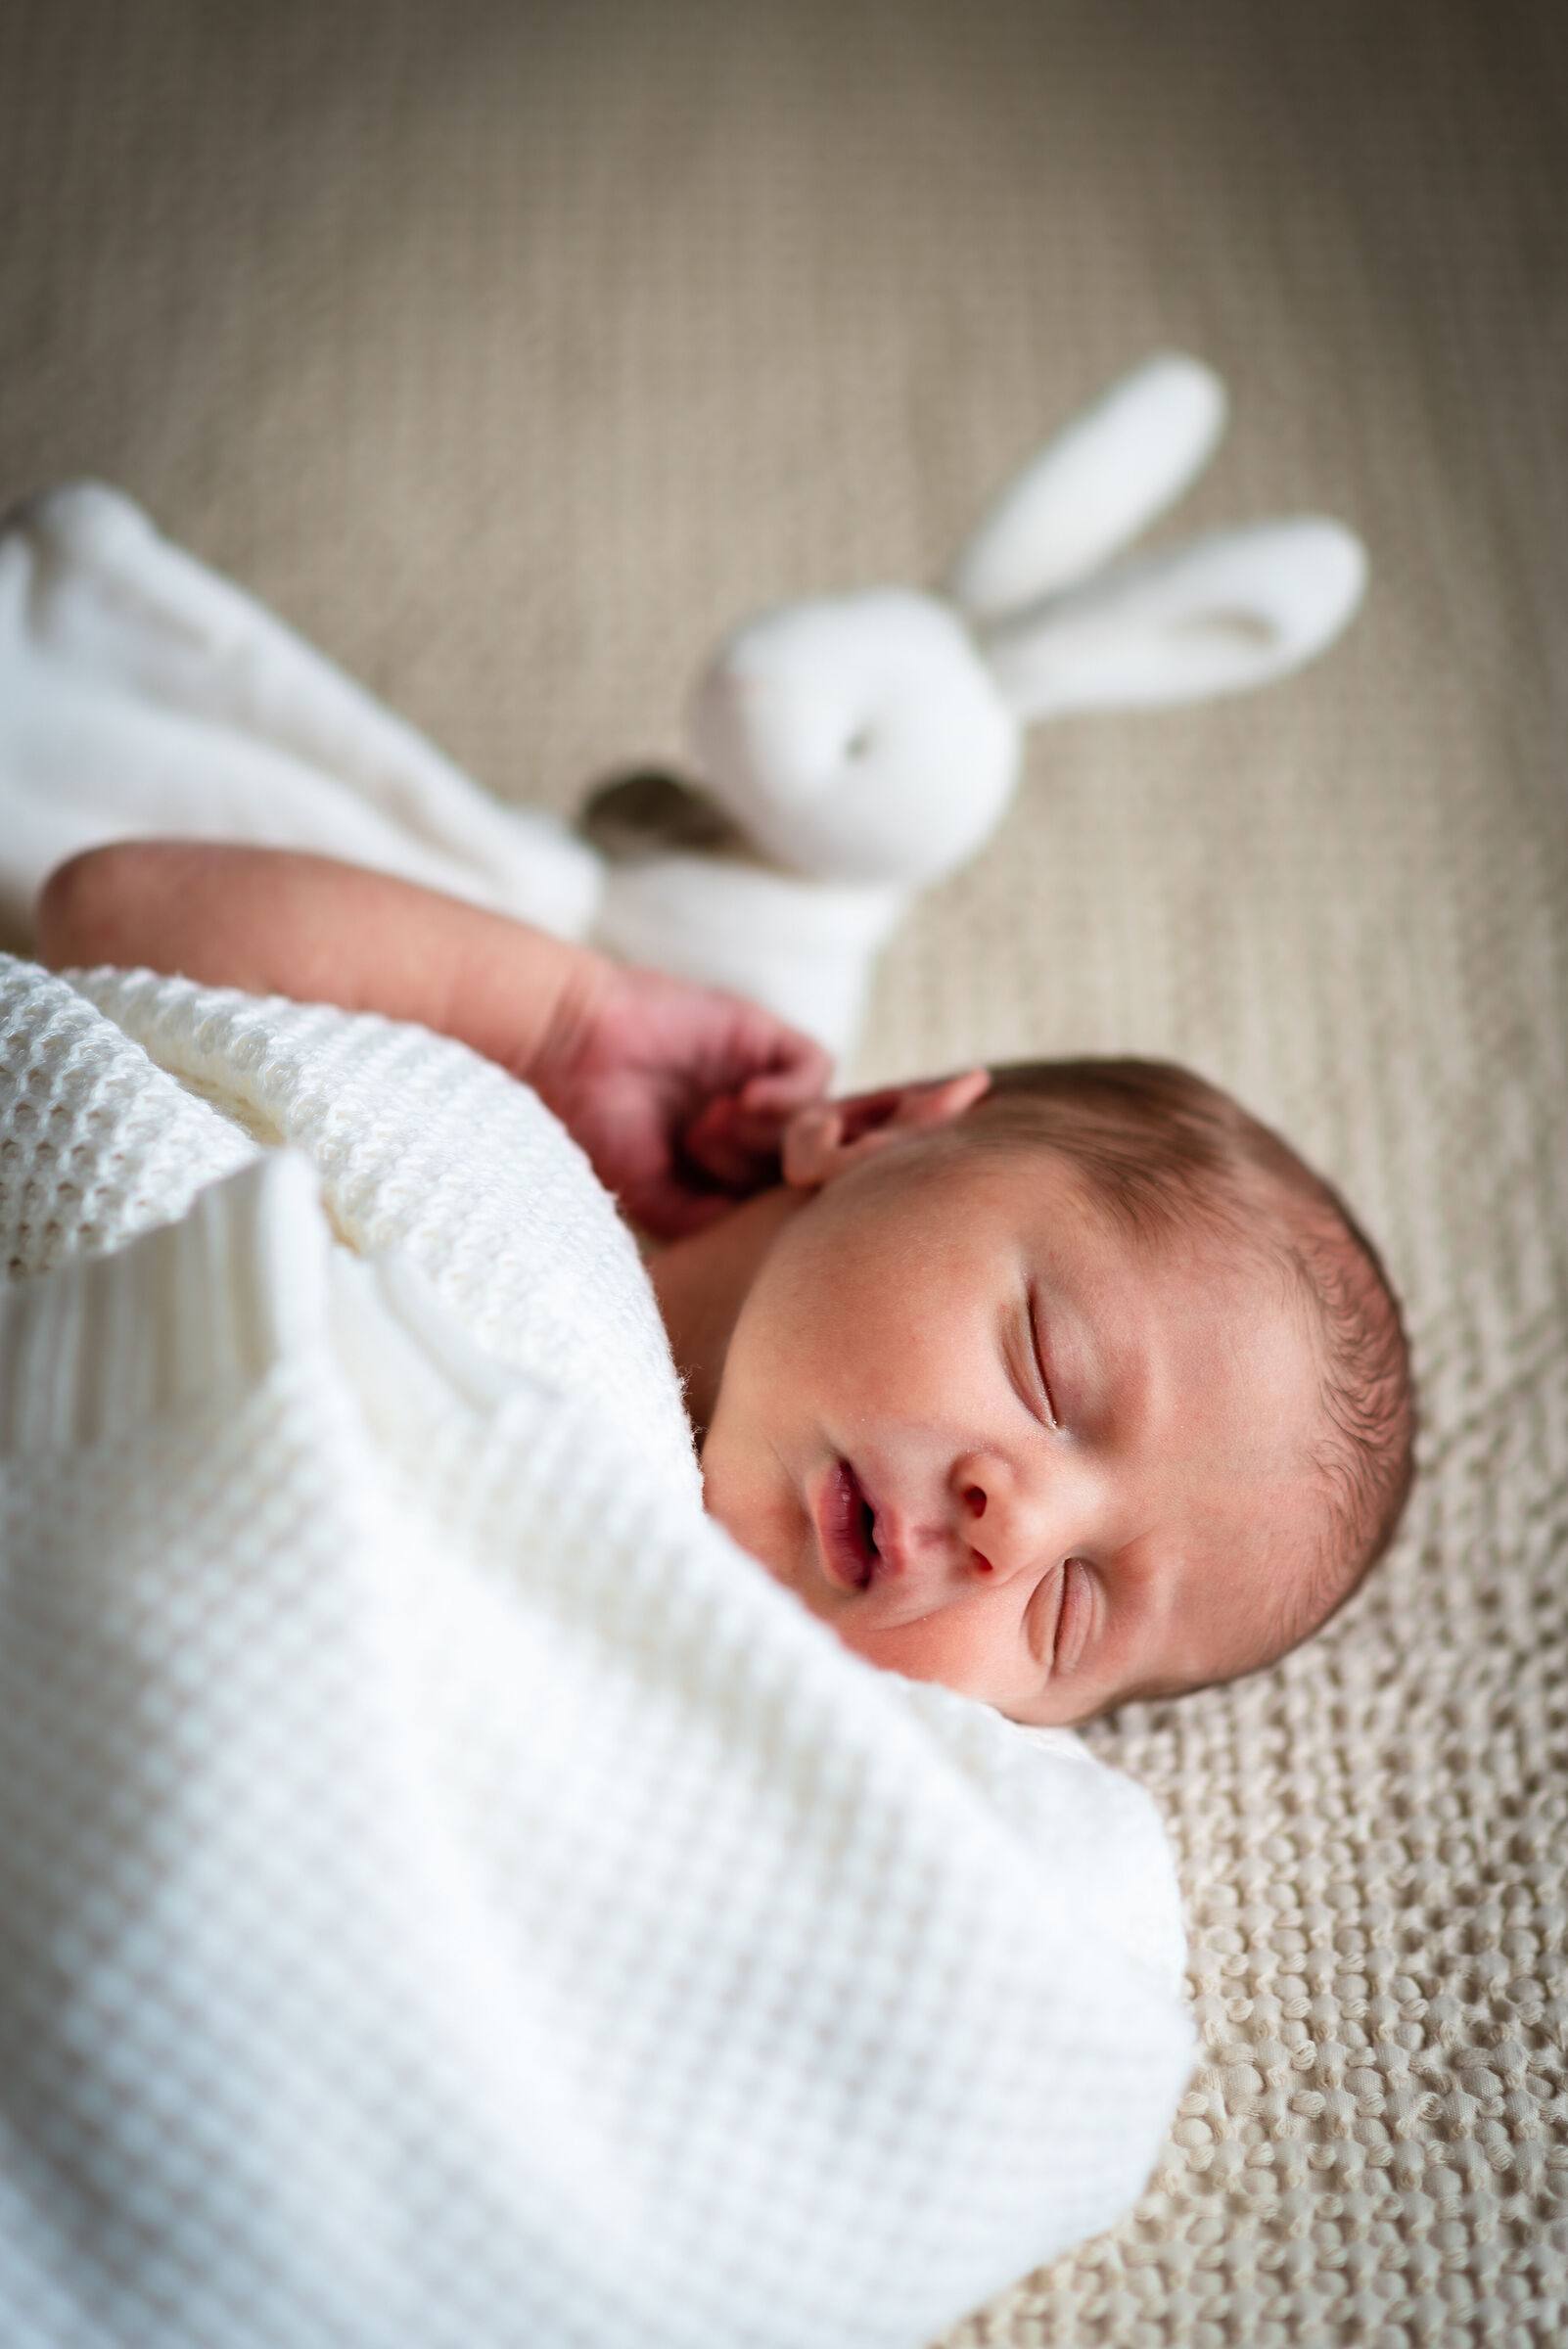 Some shots of when my son was born: Enea...